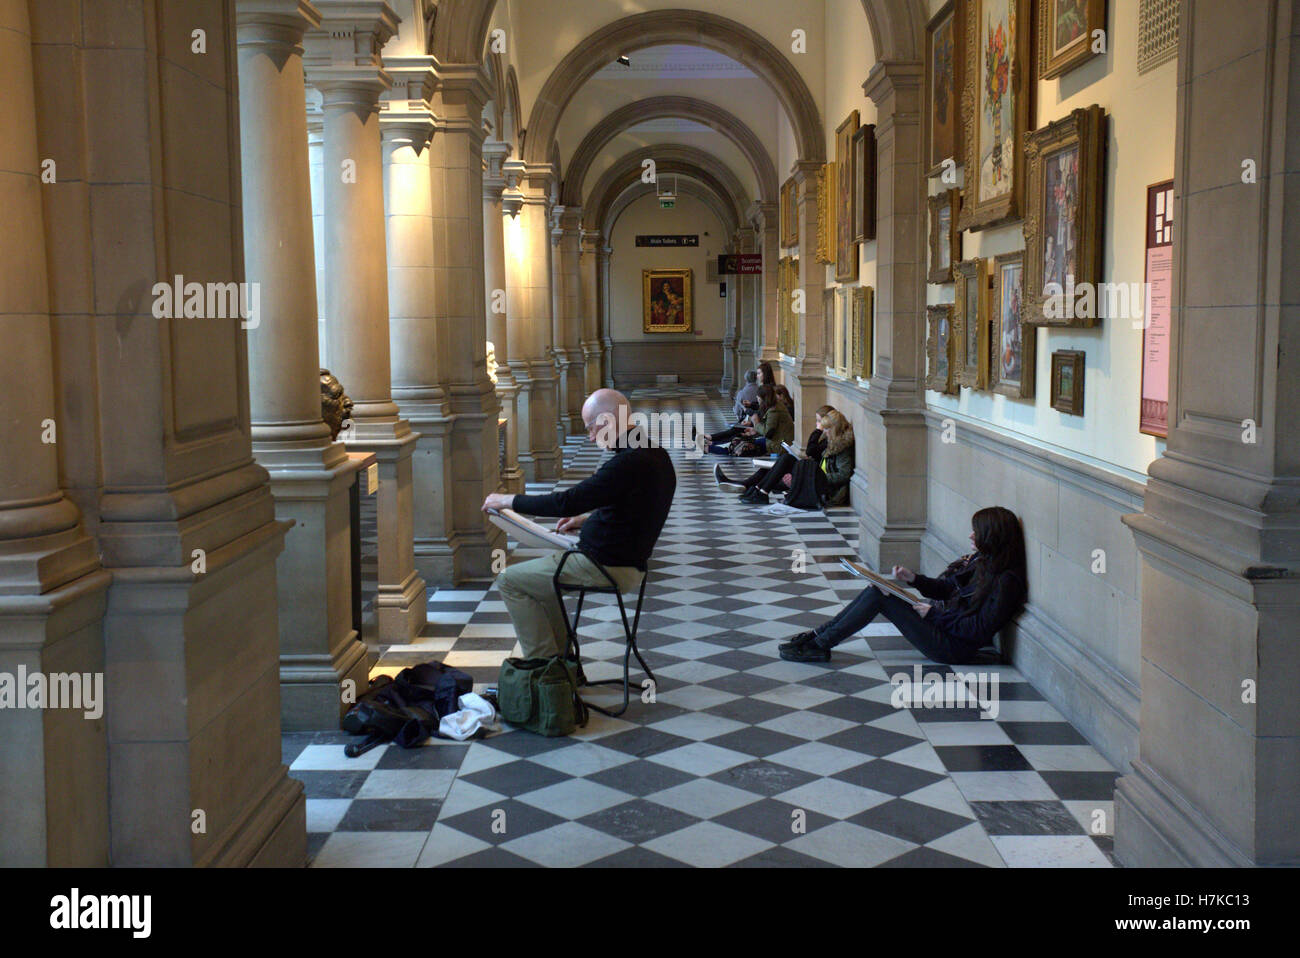 art students drawing in the museum tiled floor kelvingrove art gallery Stock Photo